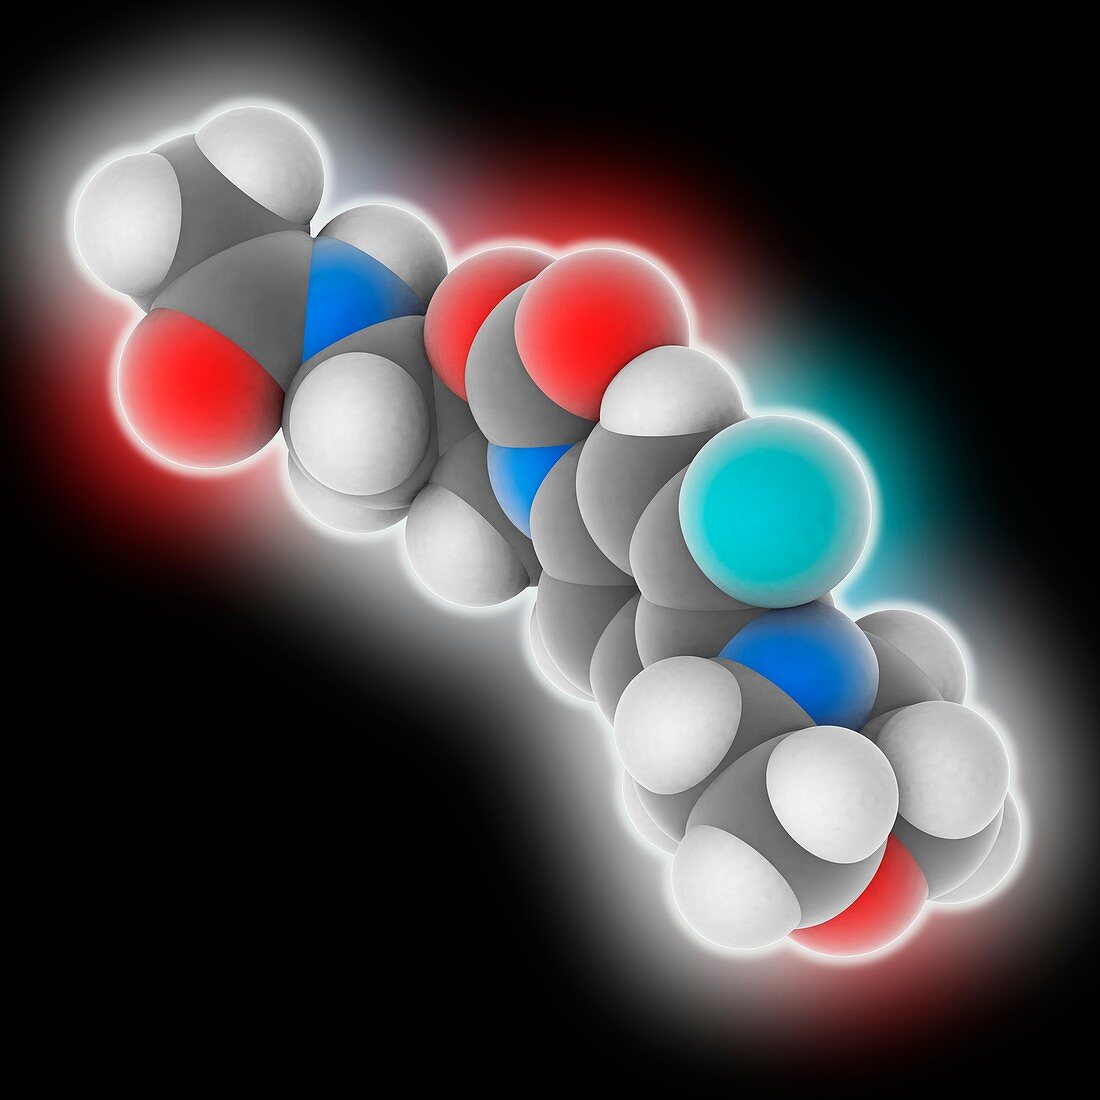 Linezolid drug molecule